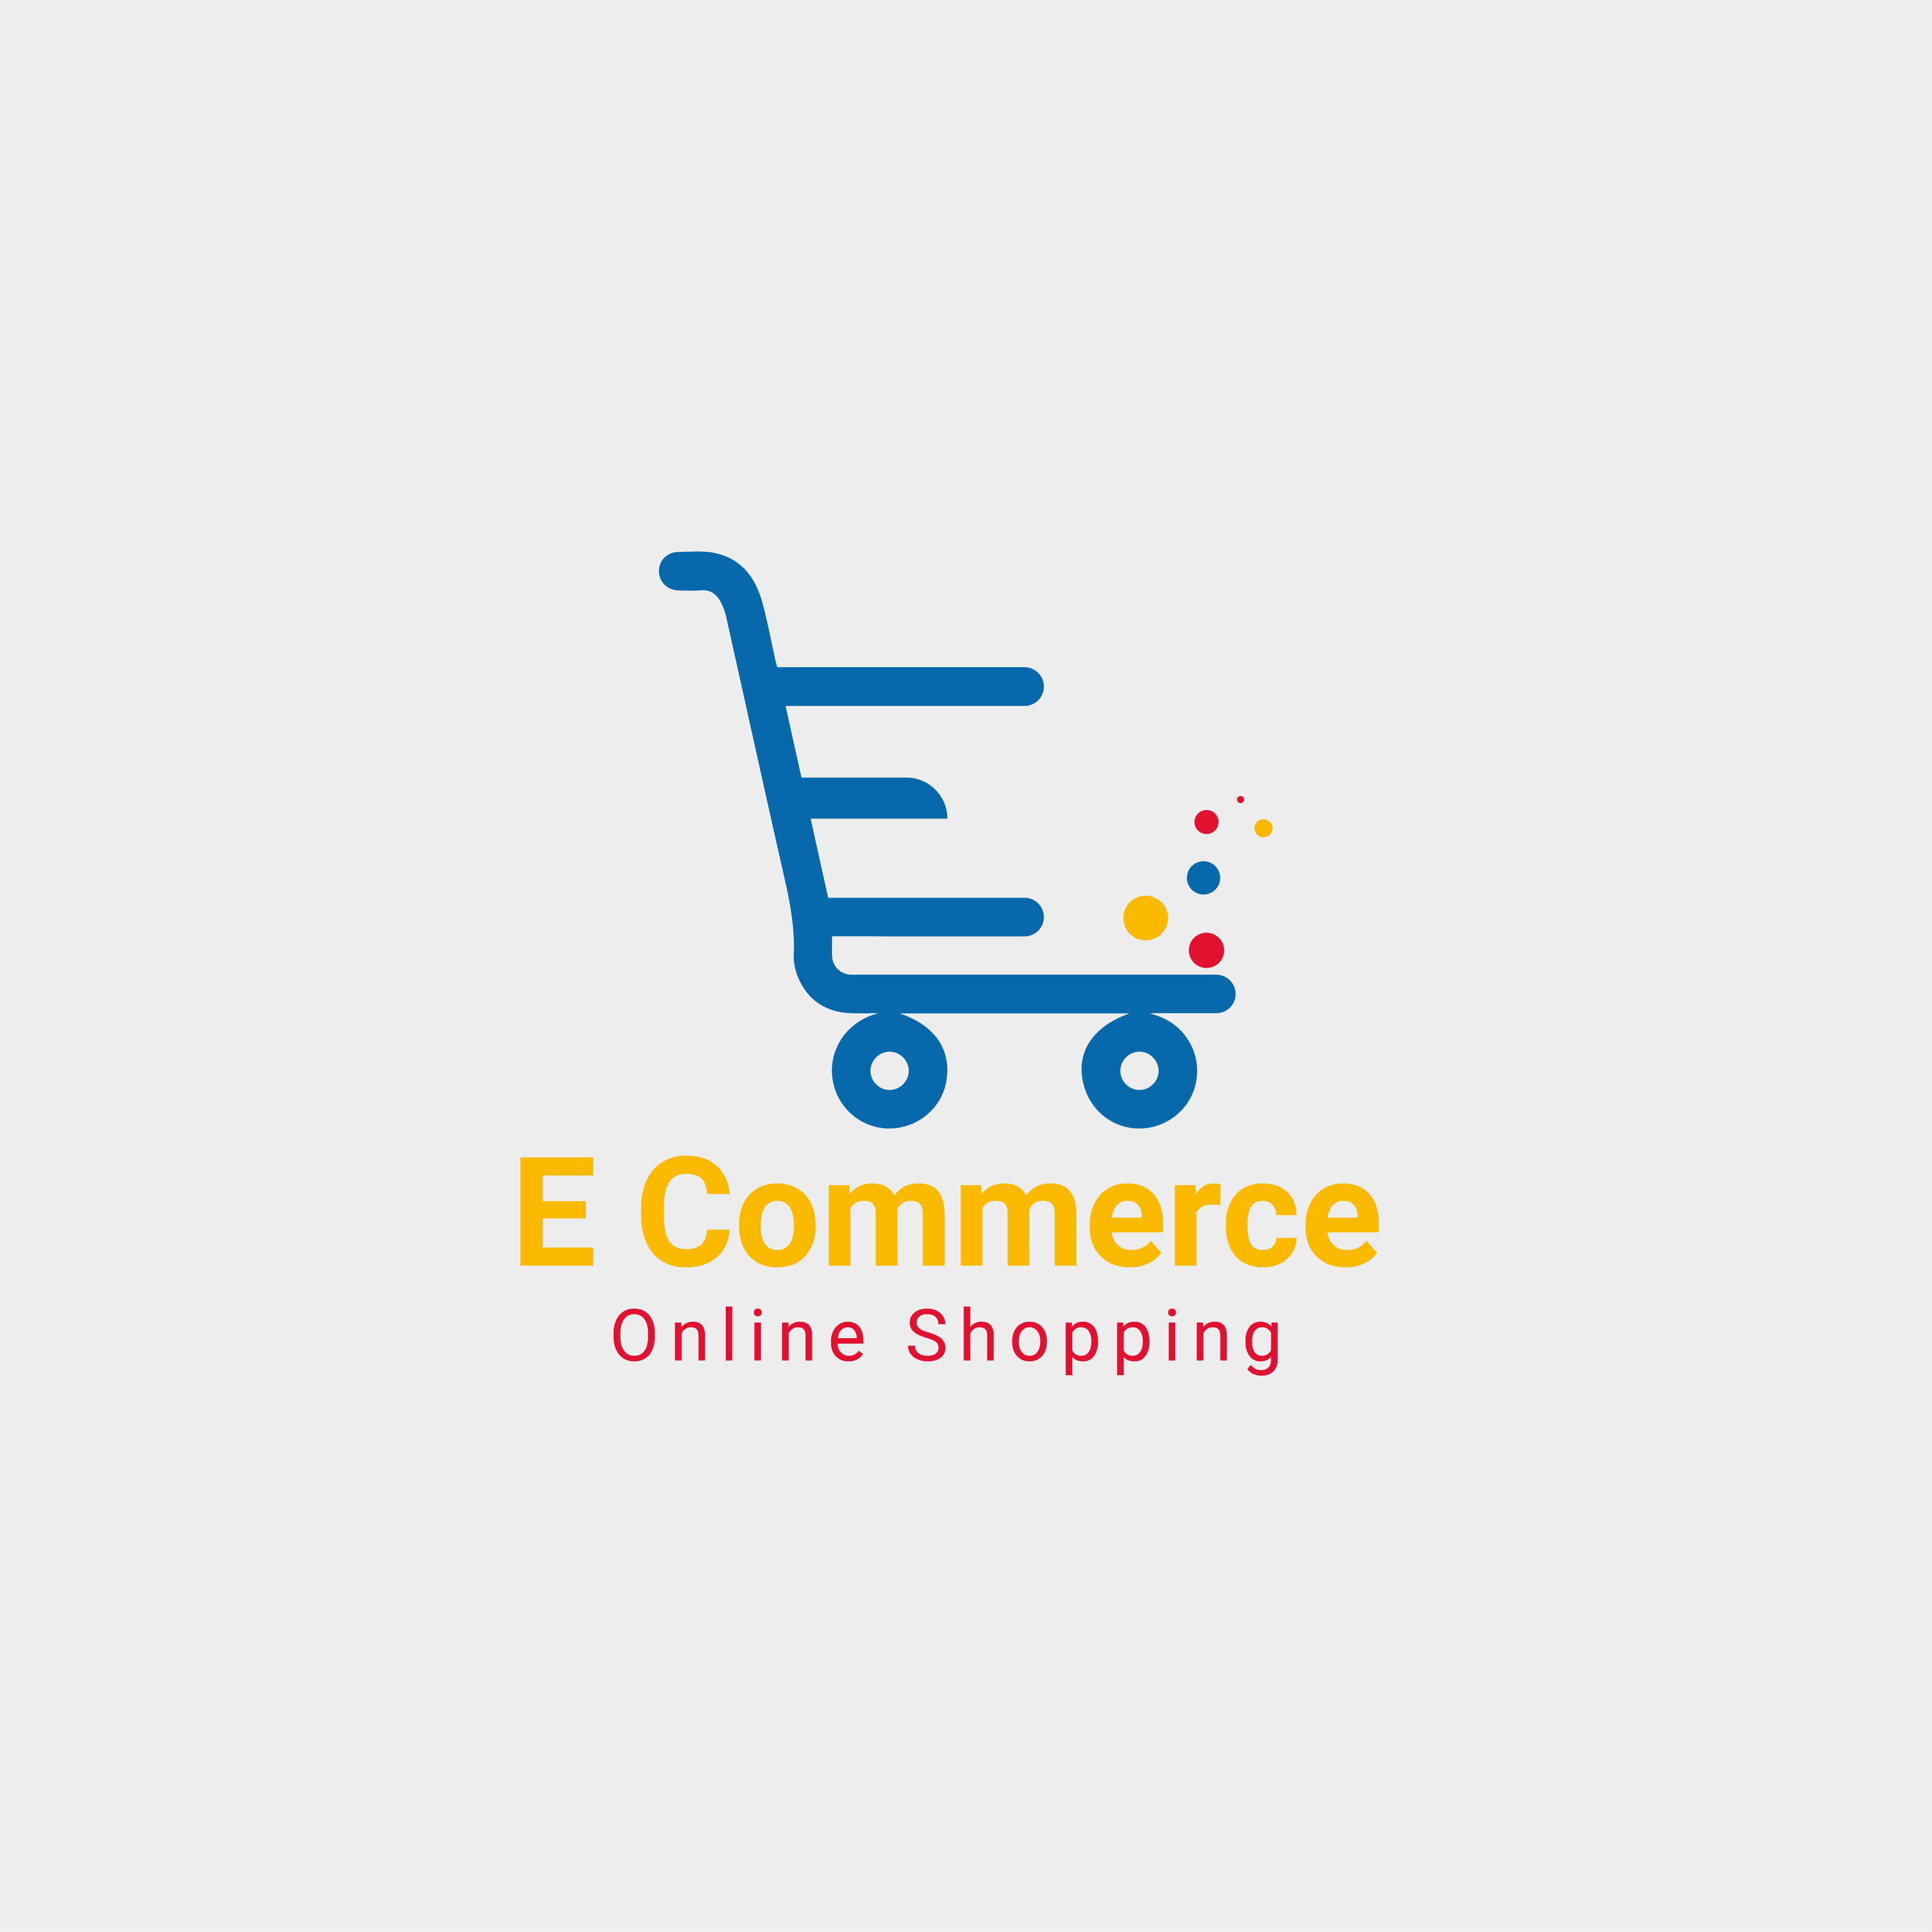 e commerce logo design cover image.